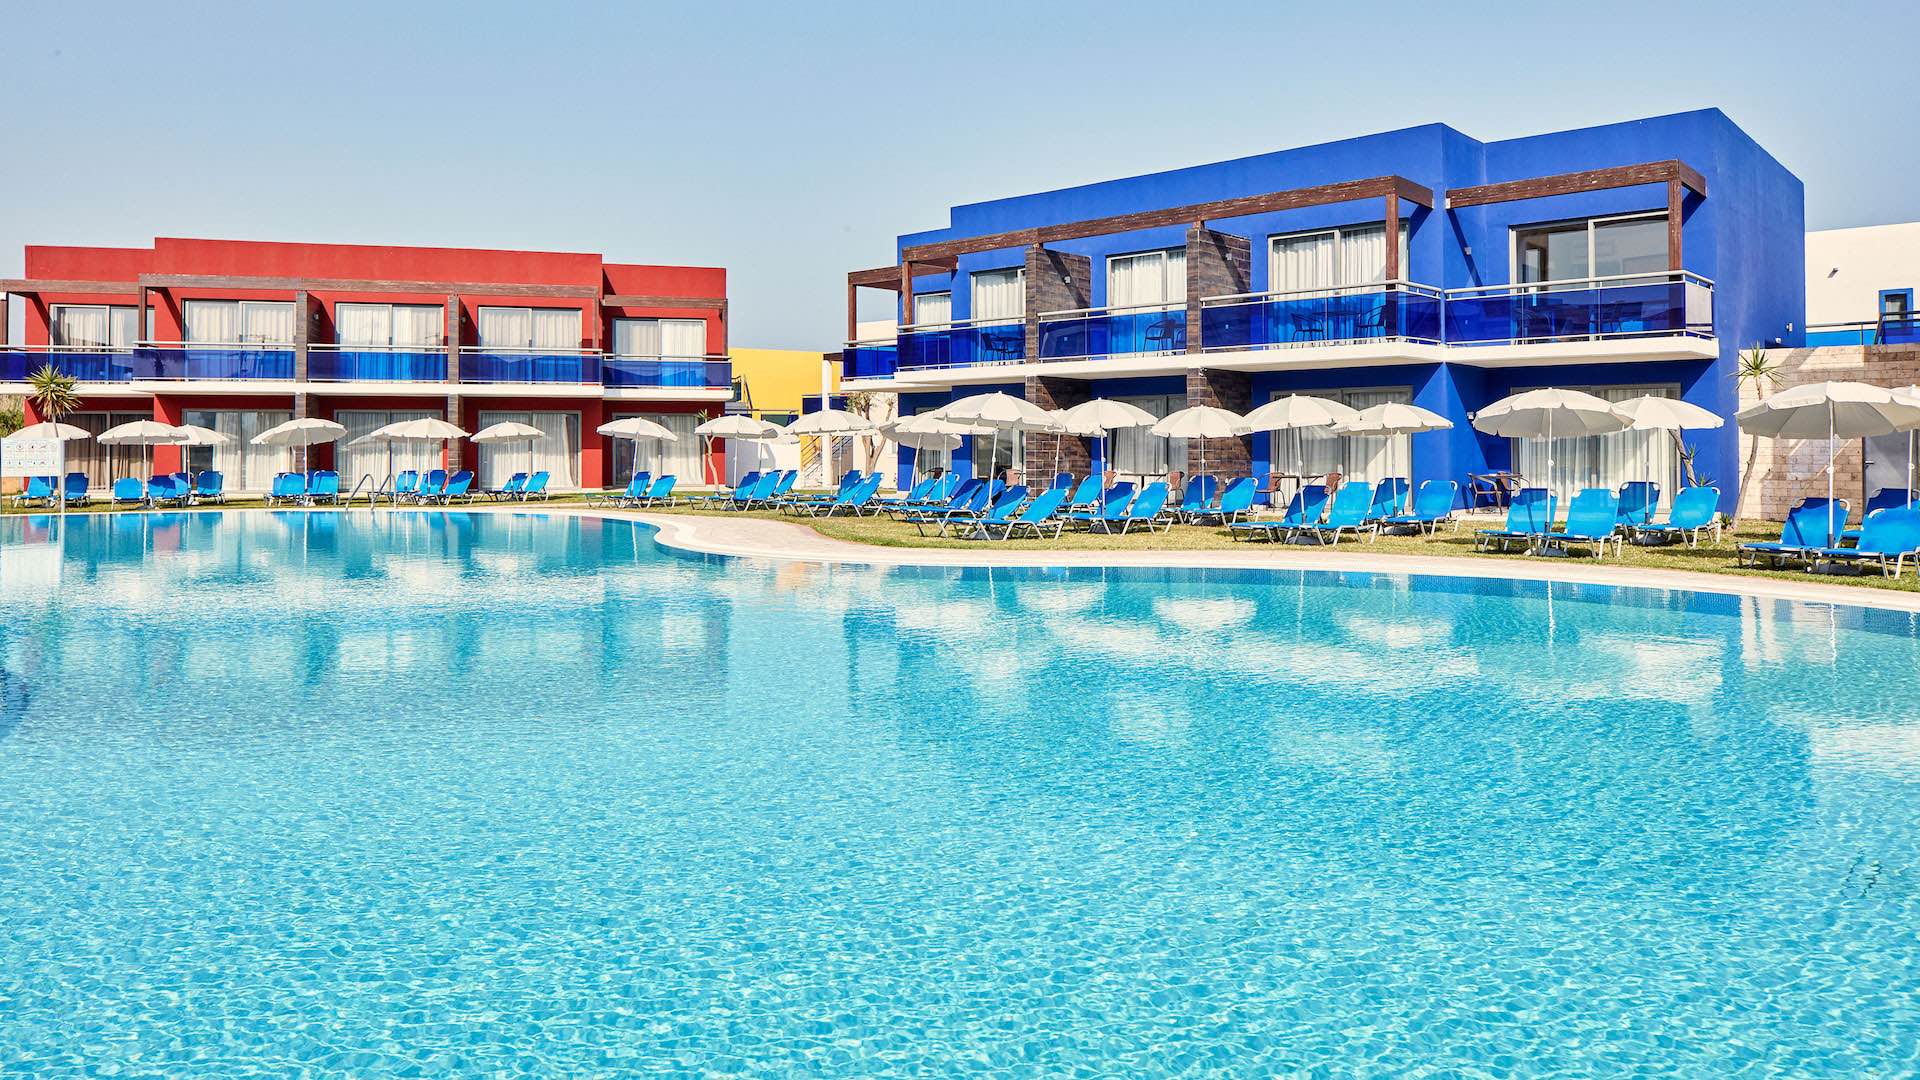 5* All Senses Nautica Blue Exclusive Resort &amp; Spa - Φάνες, Ρόδος ✦ 2 Ημέρες (1 Διανυκτέρευση) ✦ 2 άτομα + 1 παιδί έως 13ετών ✦ All Inclusive ✦ 09/04/2022 έως 30/09/2022 ✦ Μπροστά Στην Παραλία!